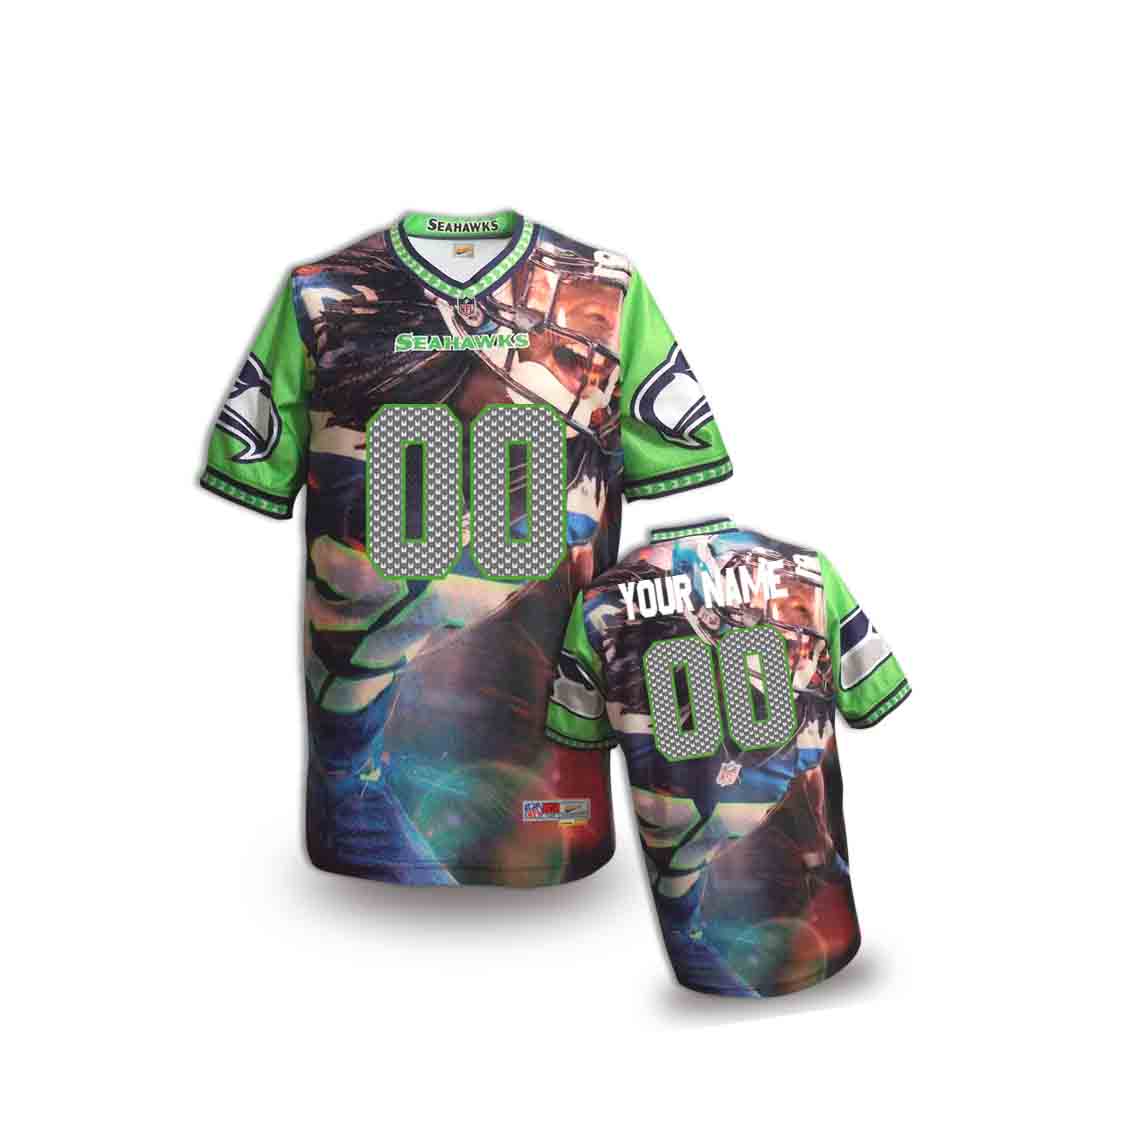 Nike Seahawks Customized Fashion Stitched Youth Jerseys16